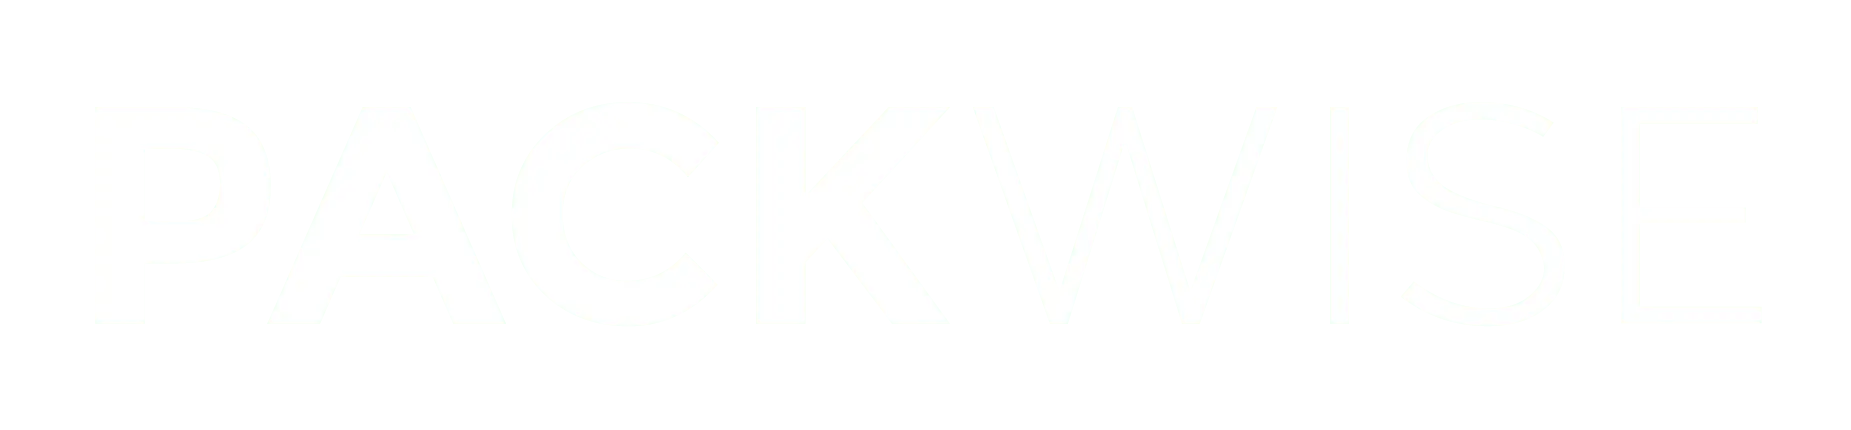 Packwise-white-logo